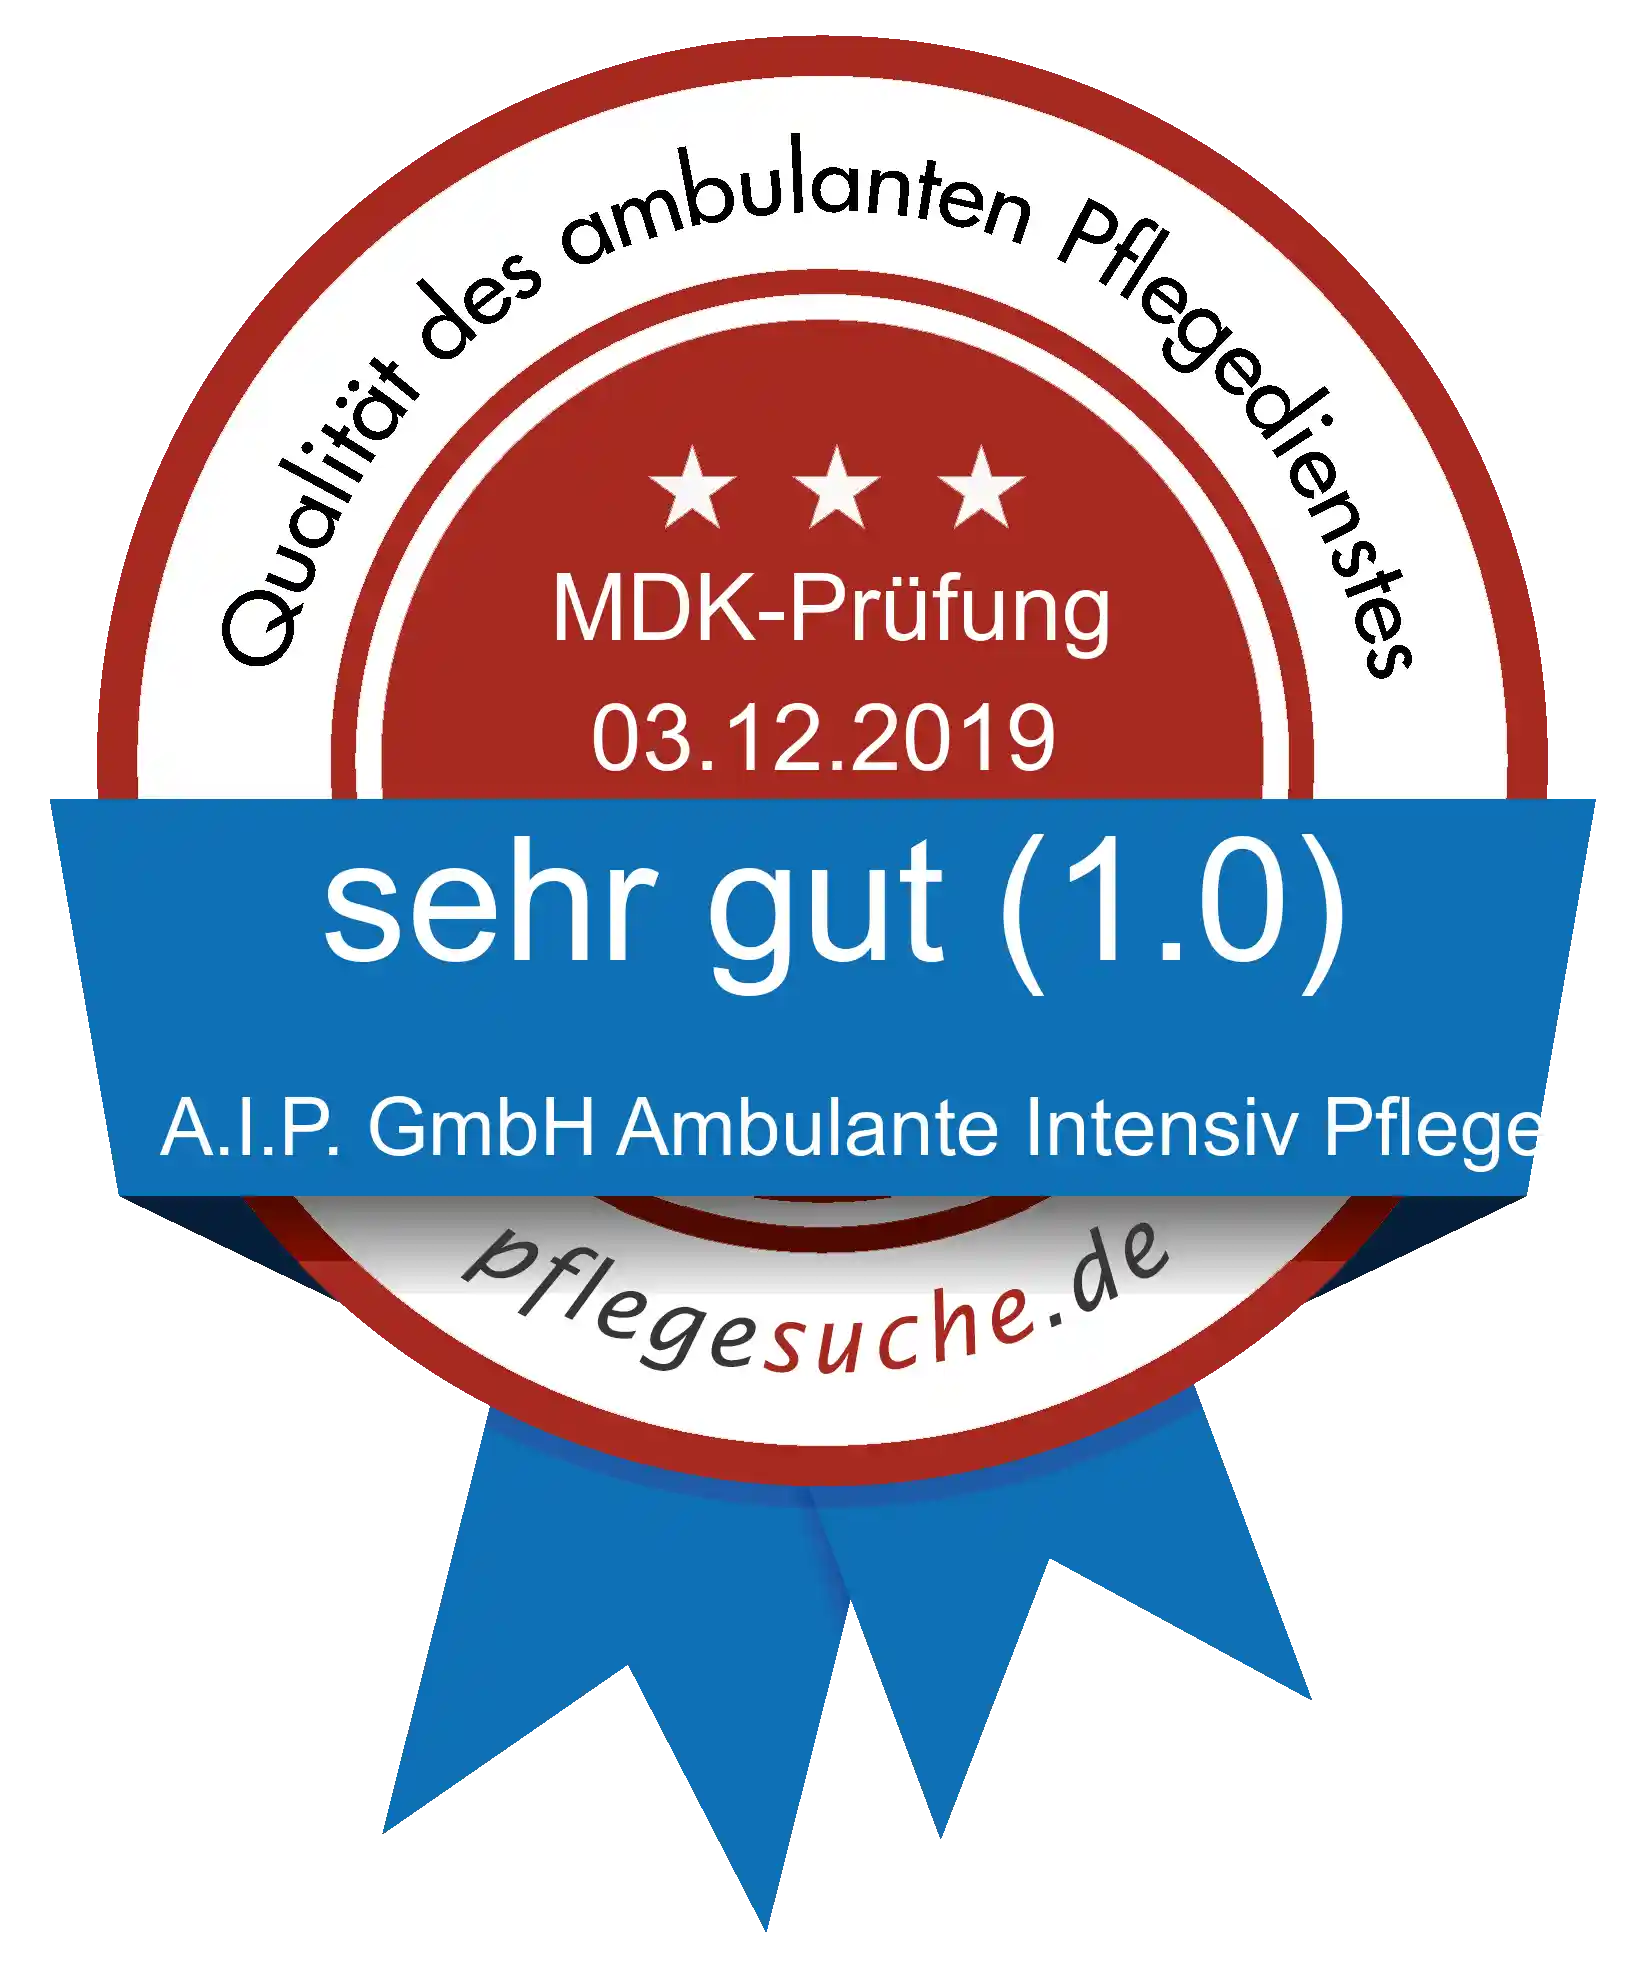 Siegel Benotung A.I.P. GmbH Ambulante Intensiv Pflege